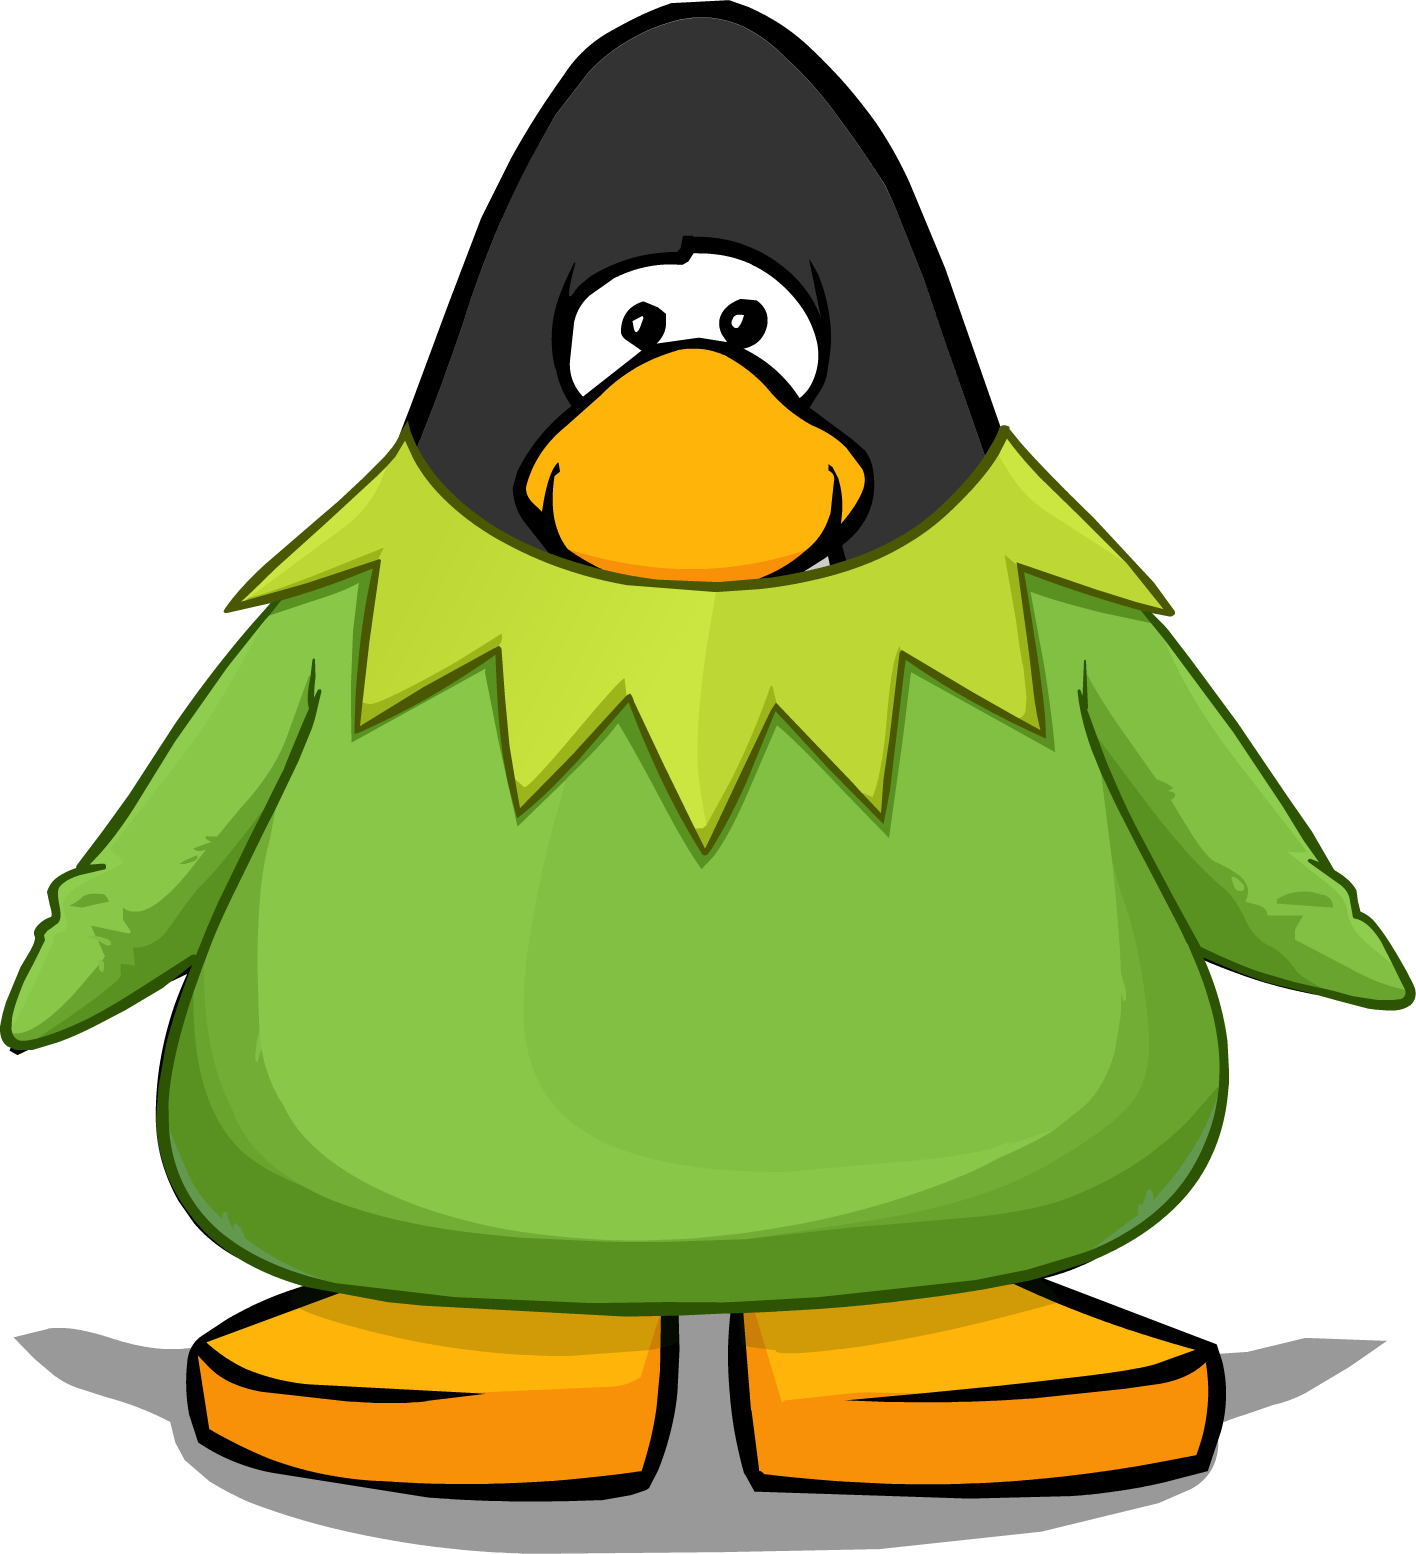 Kermit the Frog Costume | Club Penguin Wiki | Fandom powered by Wikia